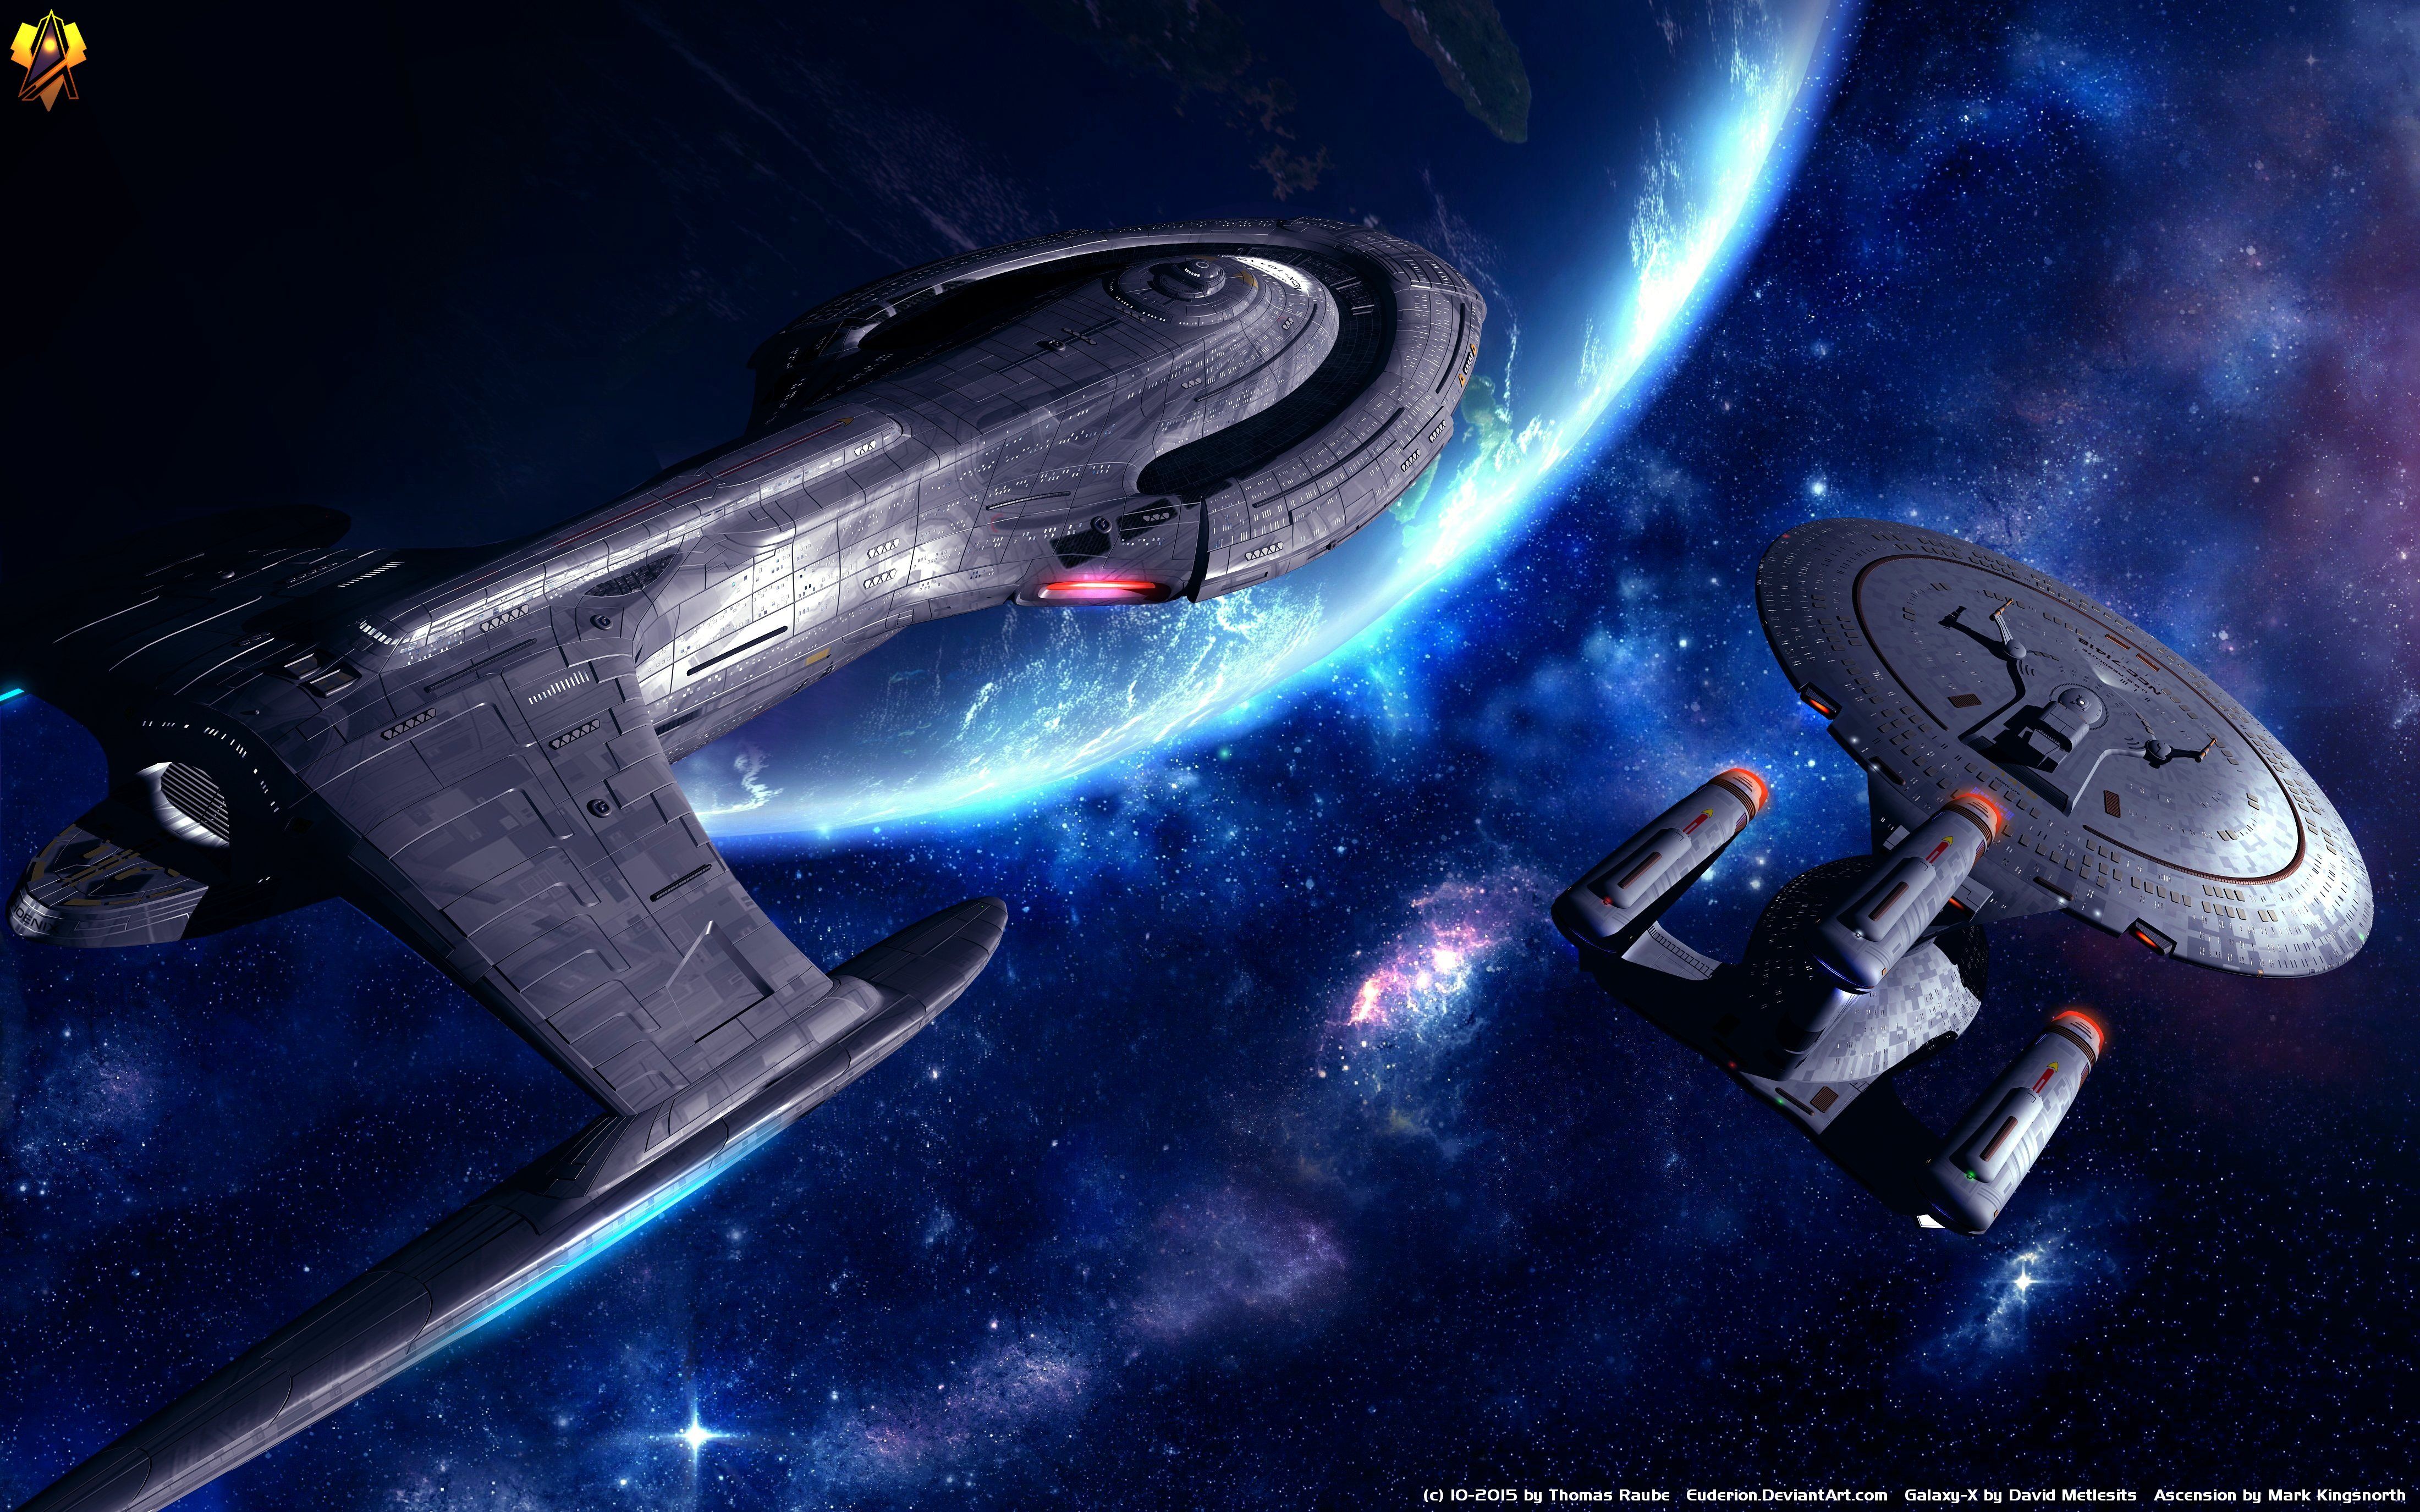 Star Trek: The Next Generation Wallpaper, Picture, Image